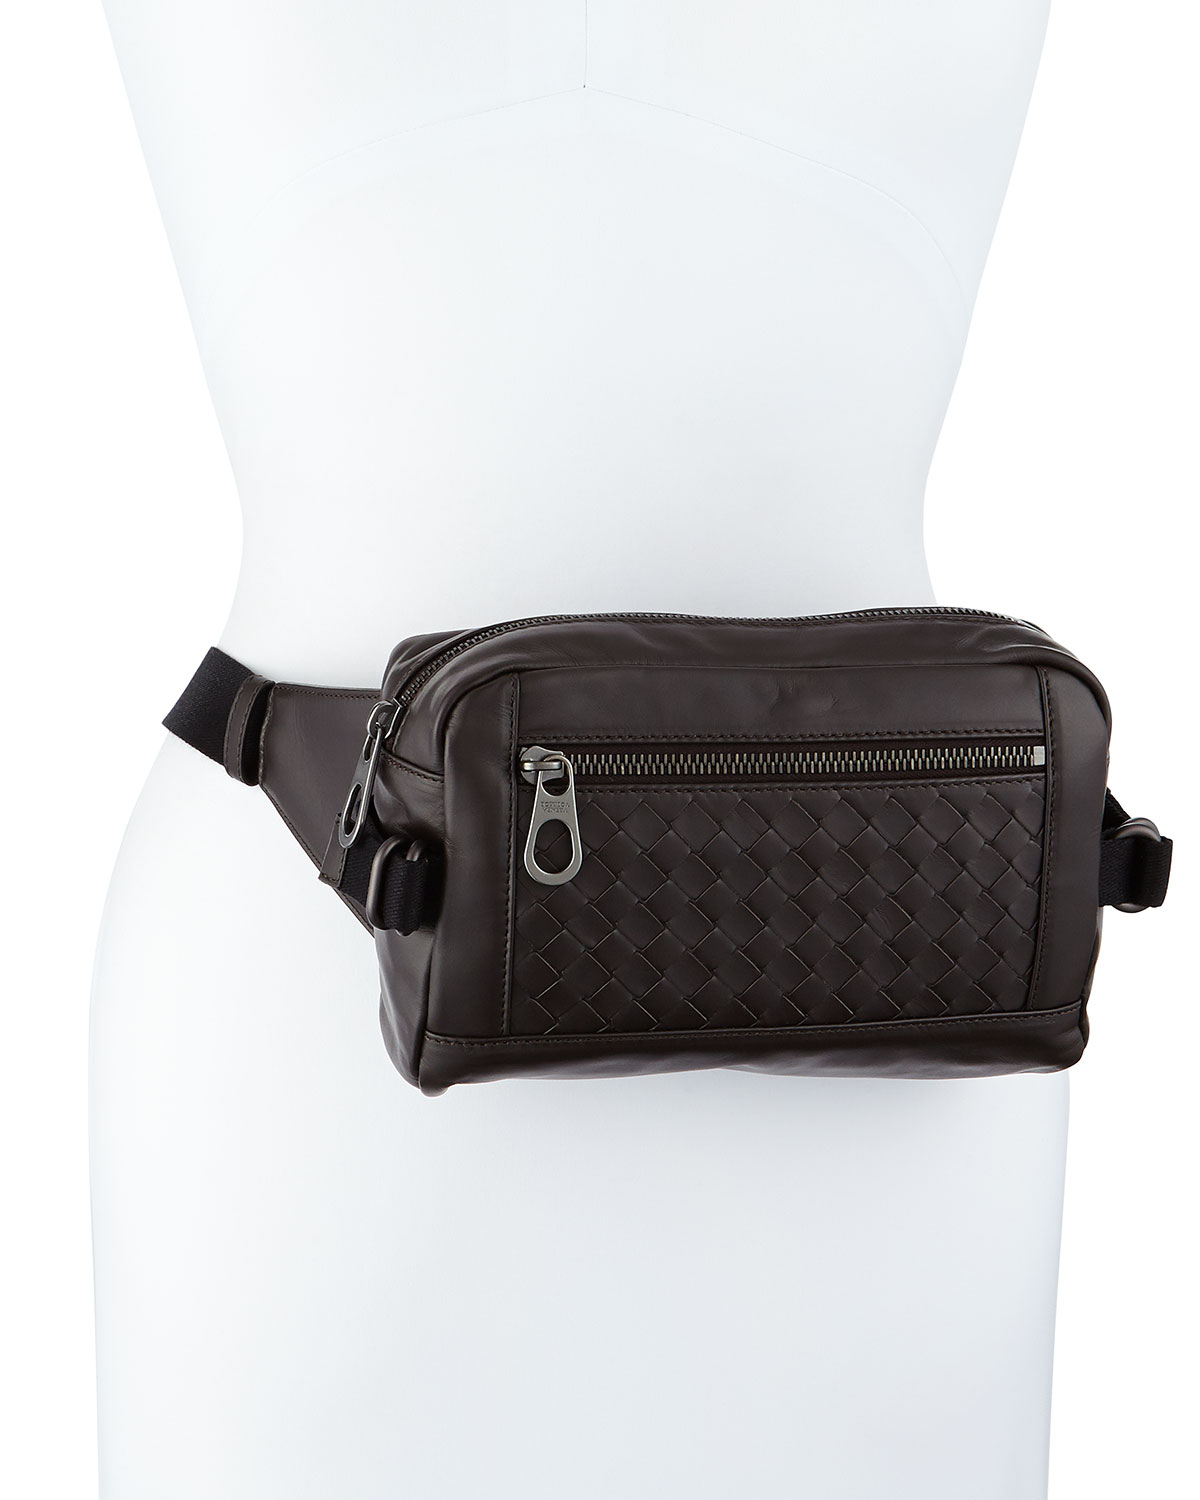 Lyst - Bottega Veneta Woven Leather Belt Bag in Brown1200 x 1500